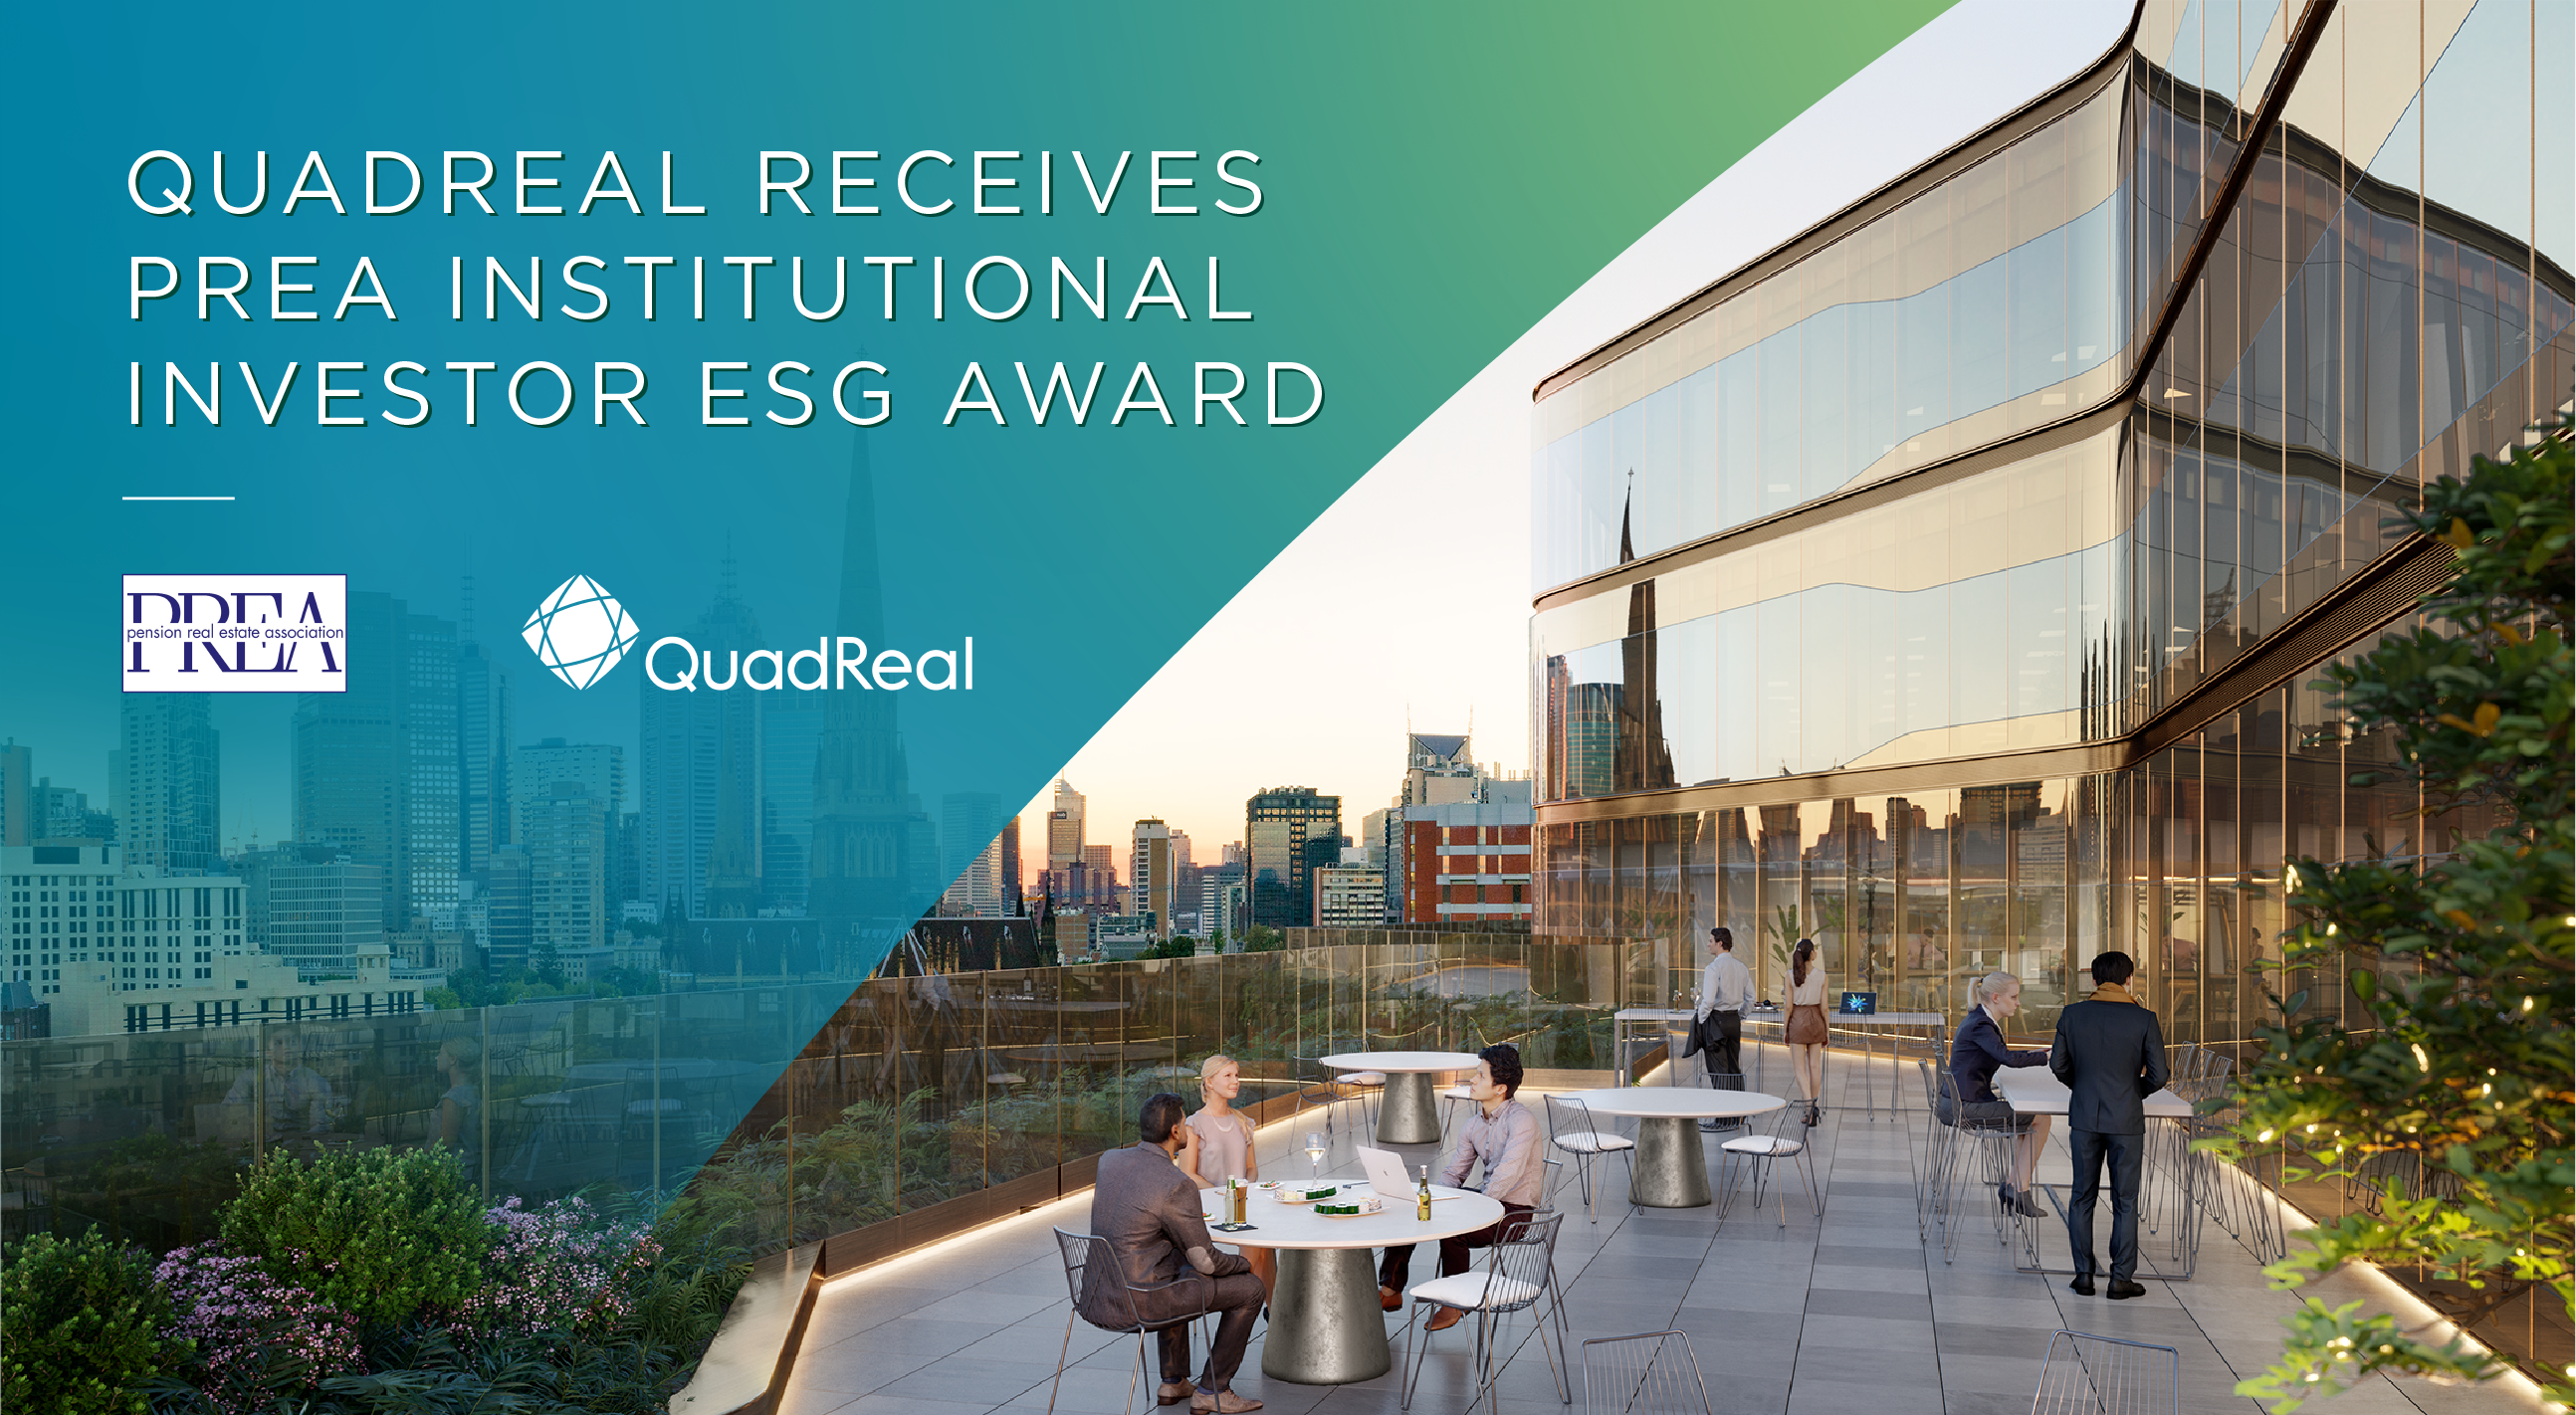 QuadReal receives Institutional Investor ESG Award